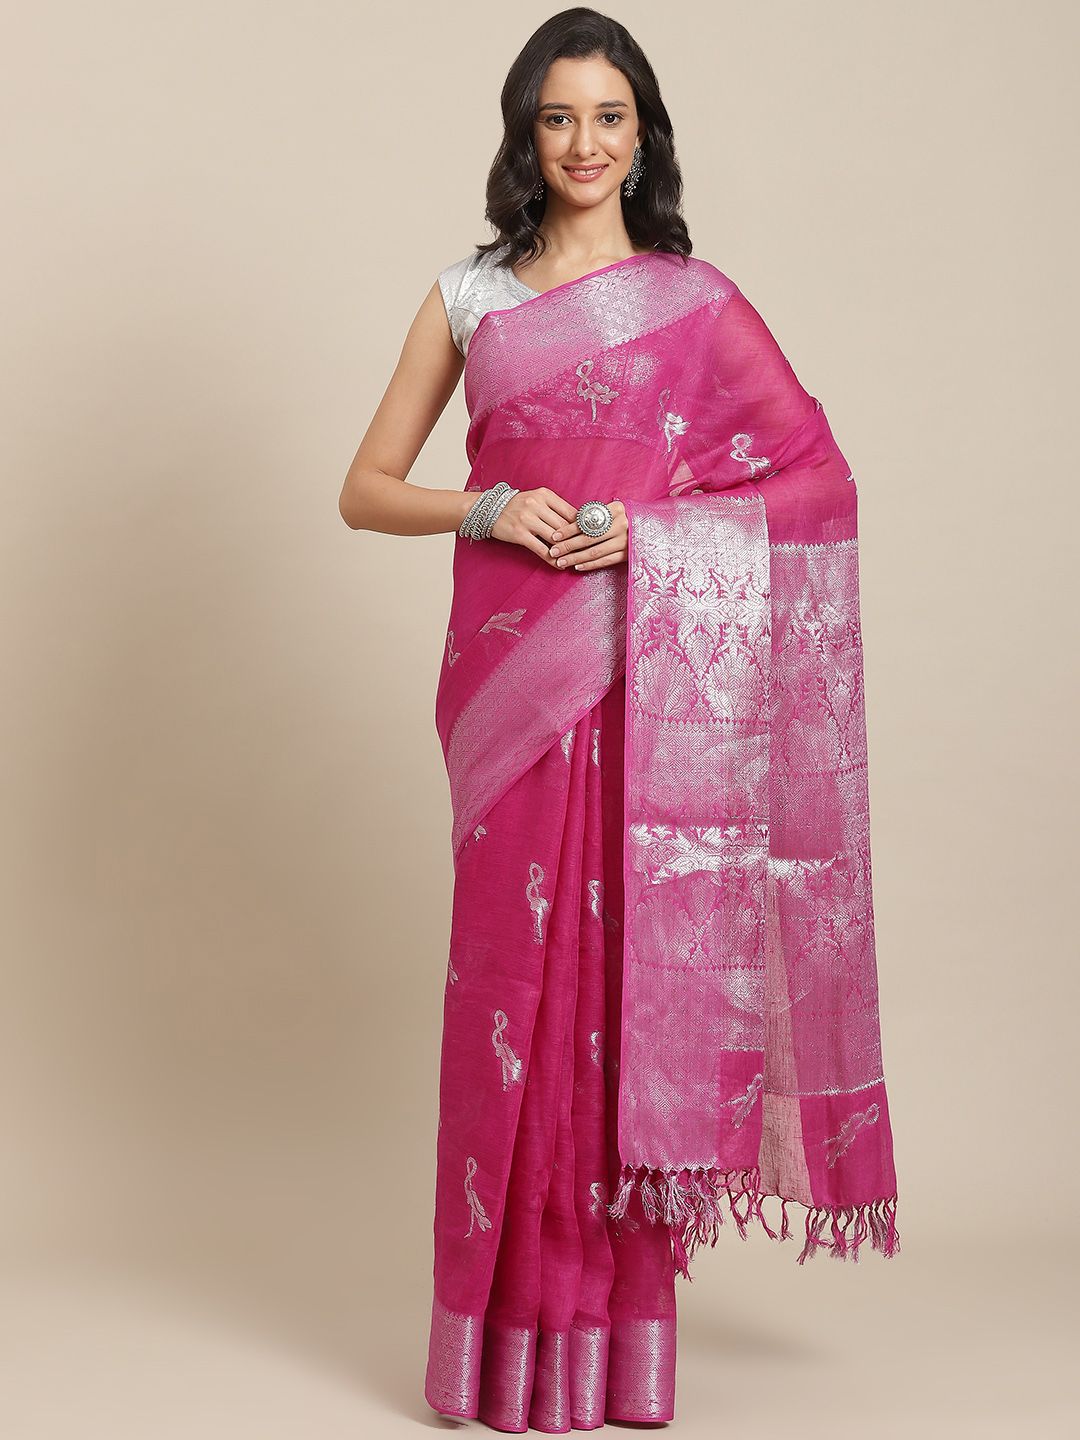 swatika Pink & Silver-Toned Ethnic Motifs Zari Pure Linen Bhagalpuri Saree Price in India